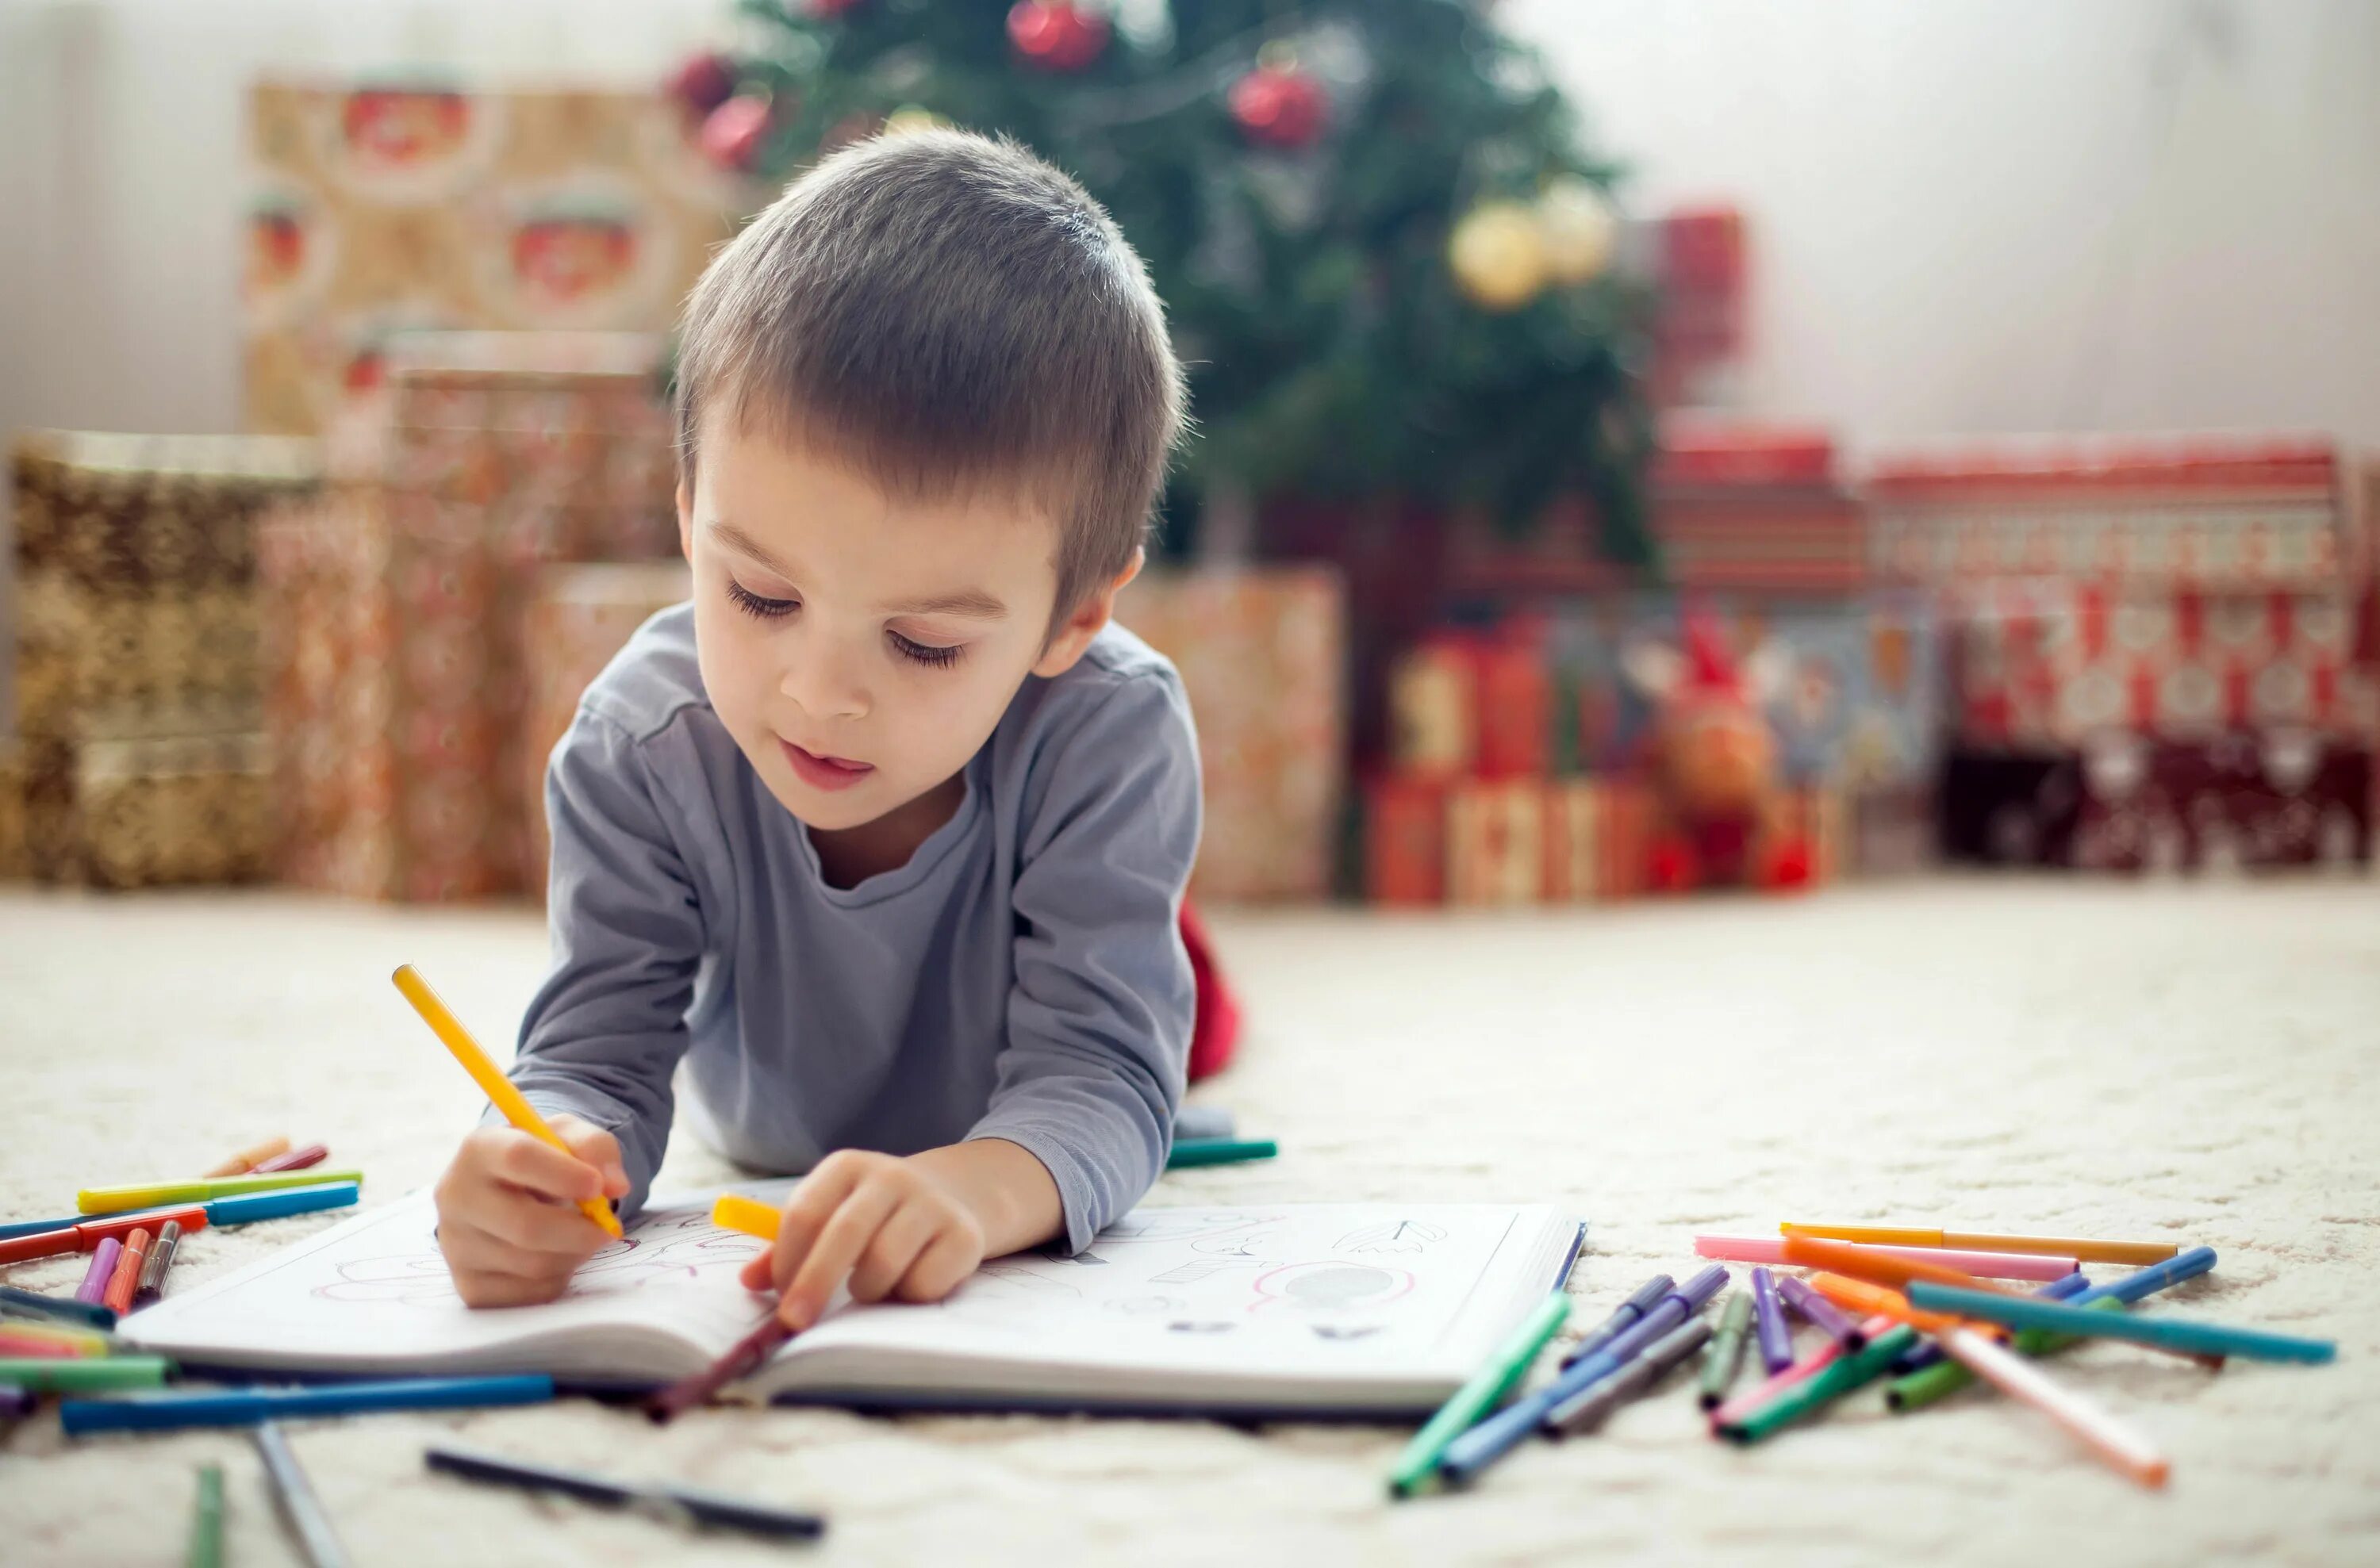 Children pic. Мальчик рисует. Рука ребенка с карандашом. Писающий мальчик. Мальчик с карандашом в руке.